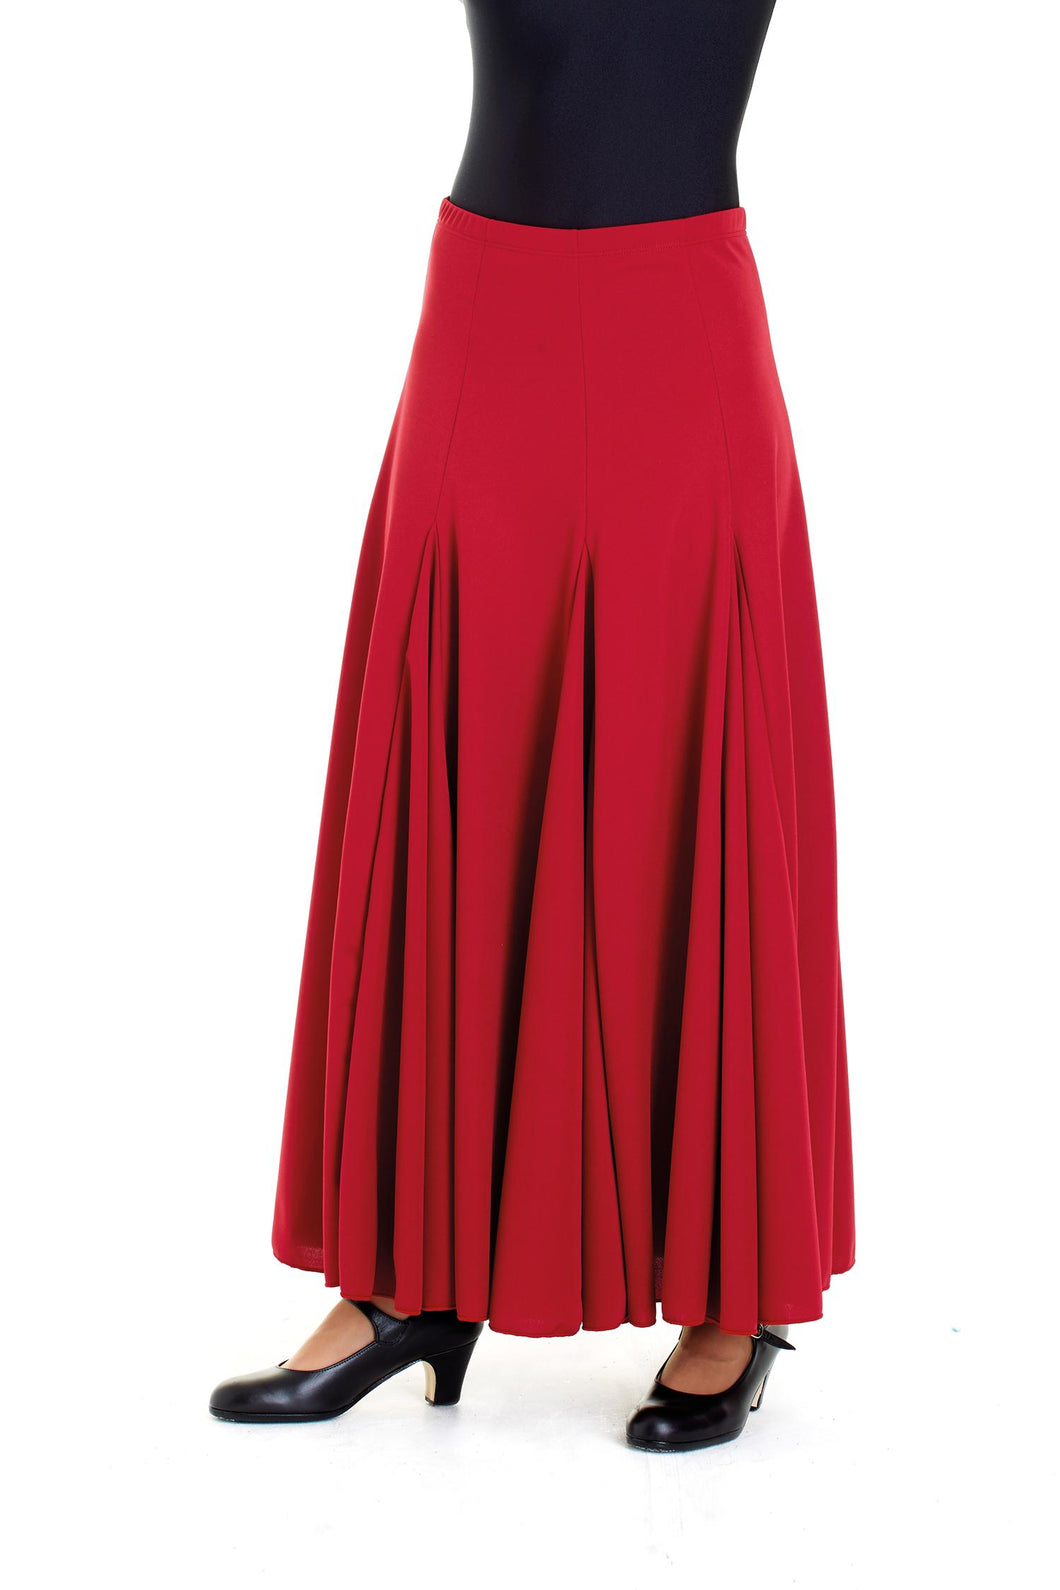 Flared 8-Paneled Flamenco Skirt